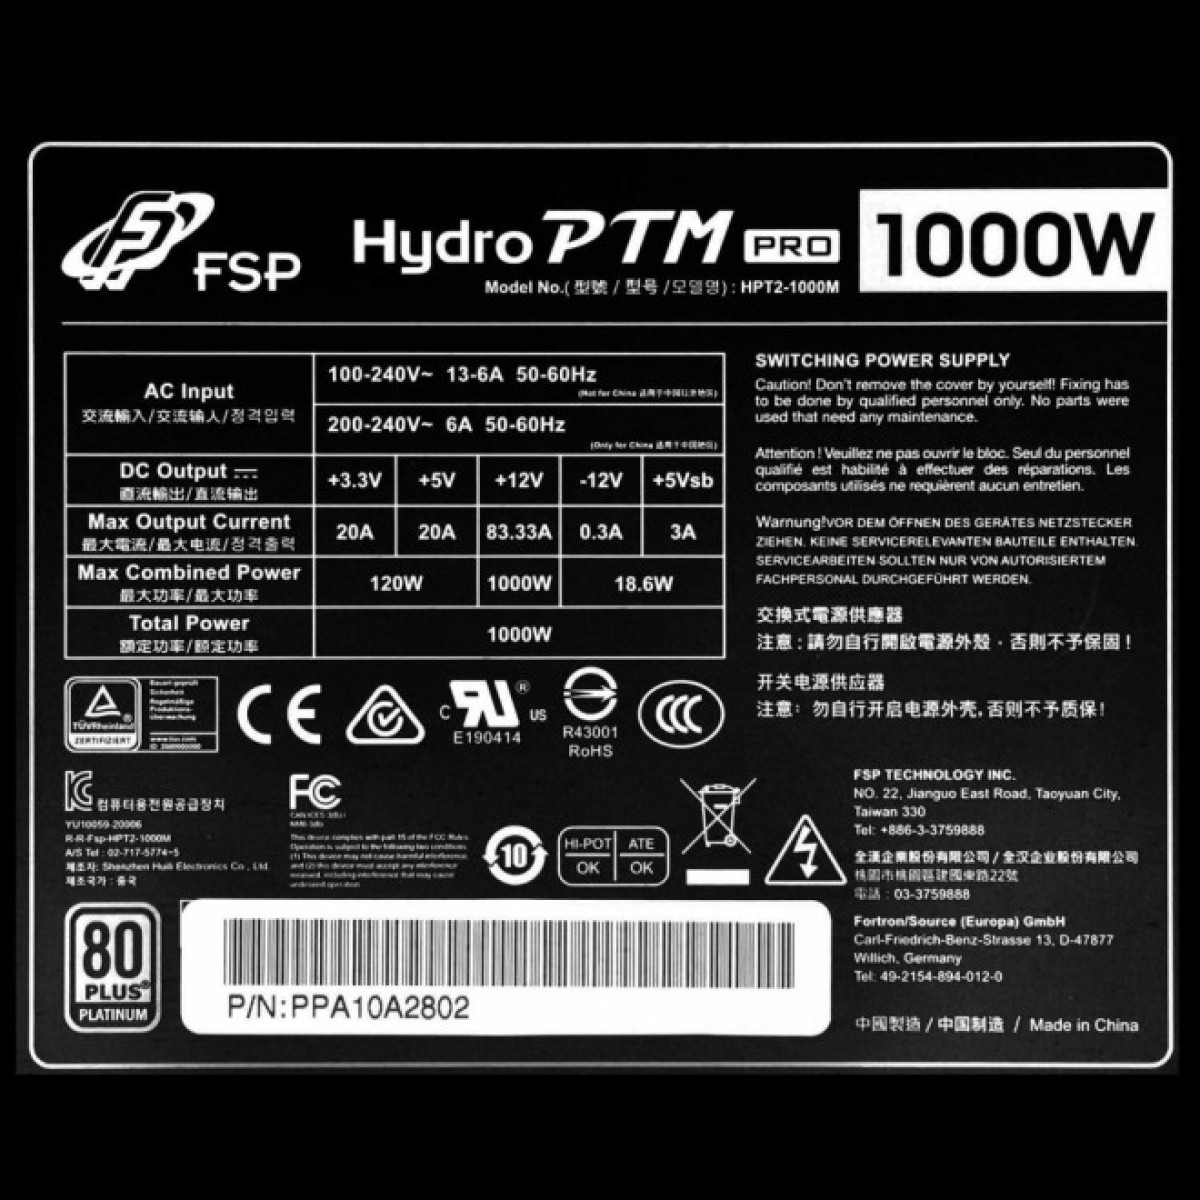 Блок питания FSP 1000W HYDRO PTM PRO (HPT2-1000M) 98_98.jpg - фото 3